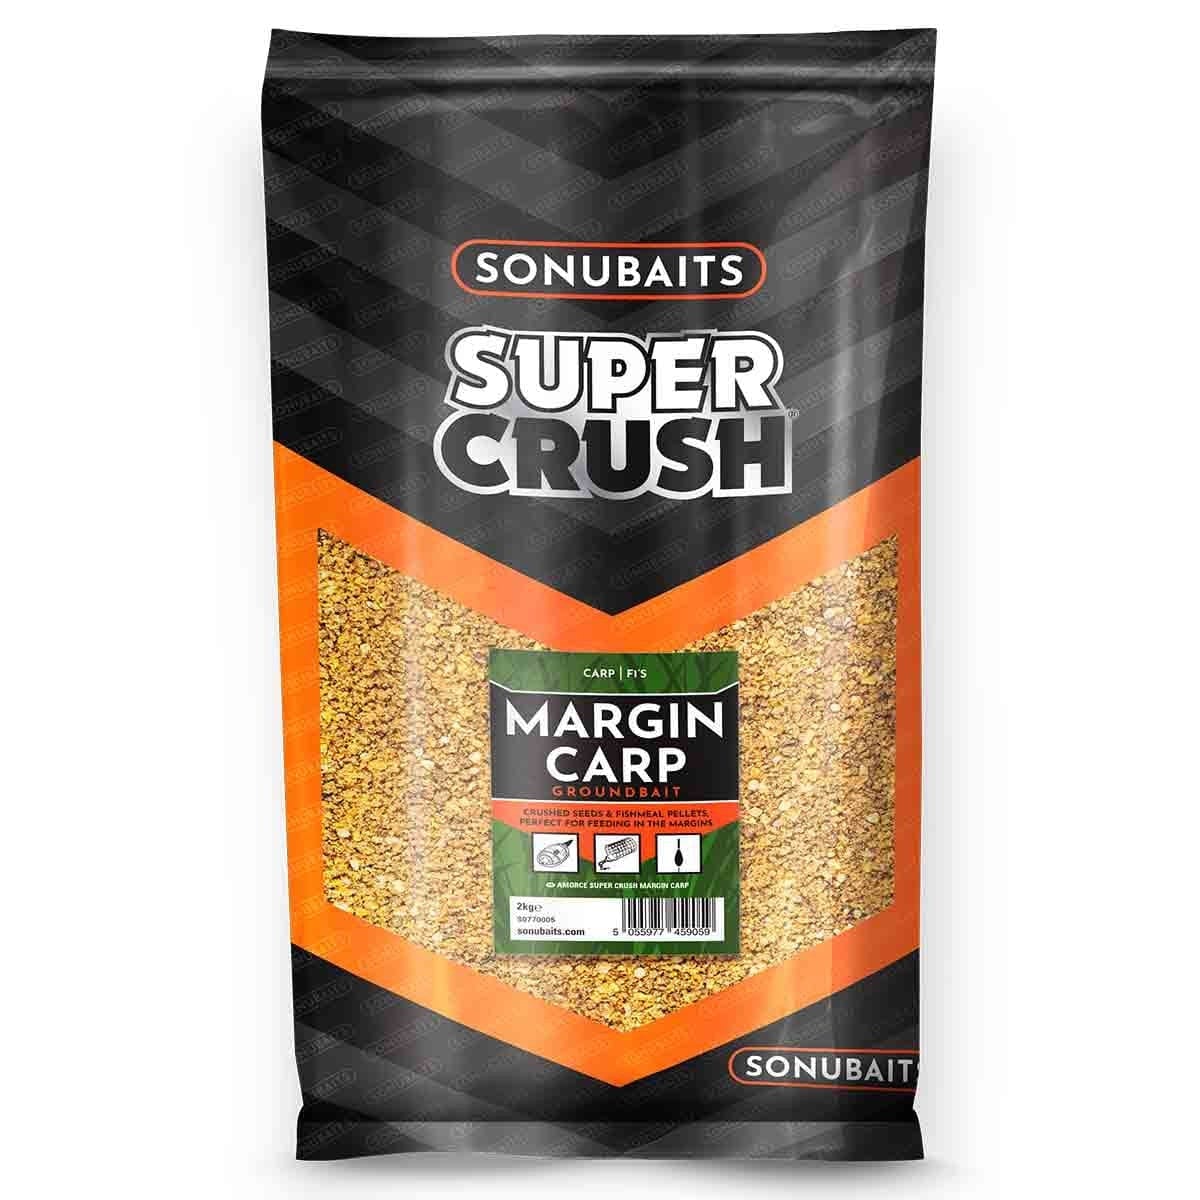 Sonubaits Super Crush Margin Carp (2kg).